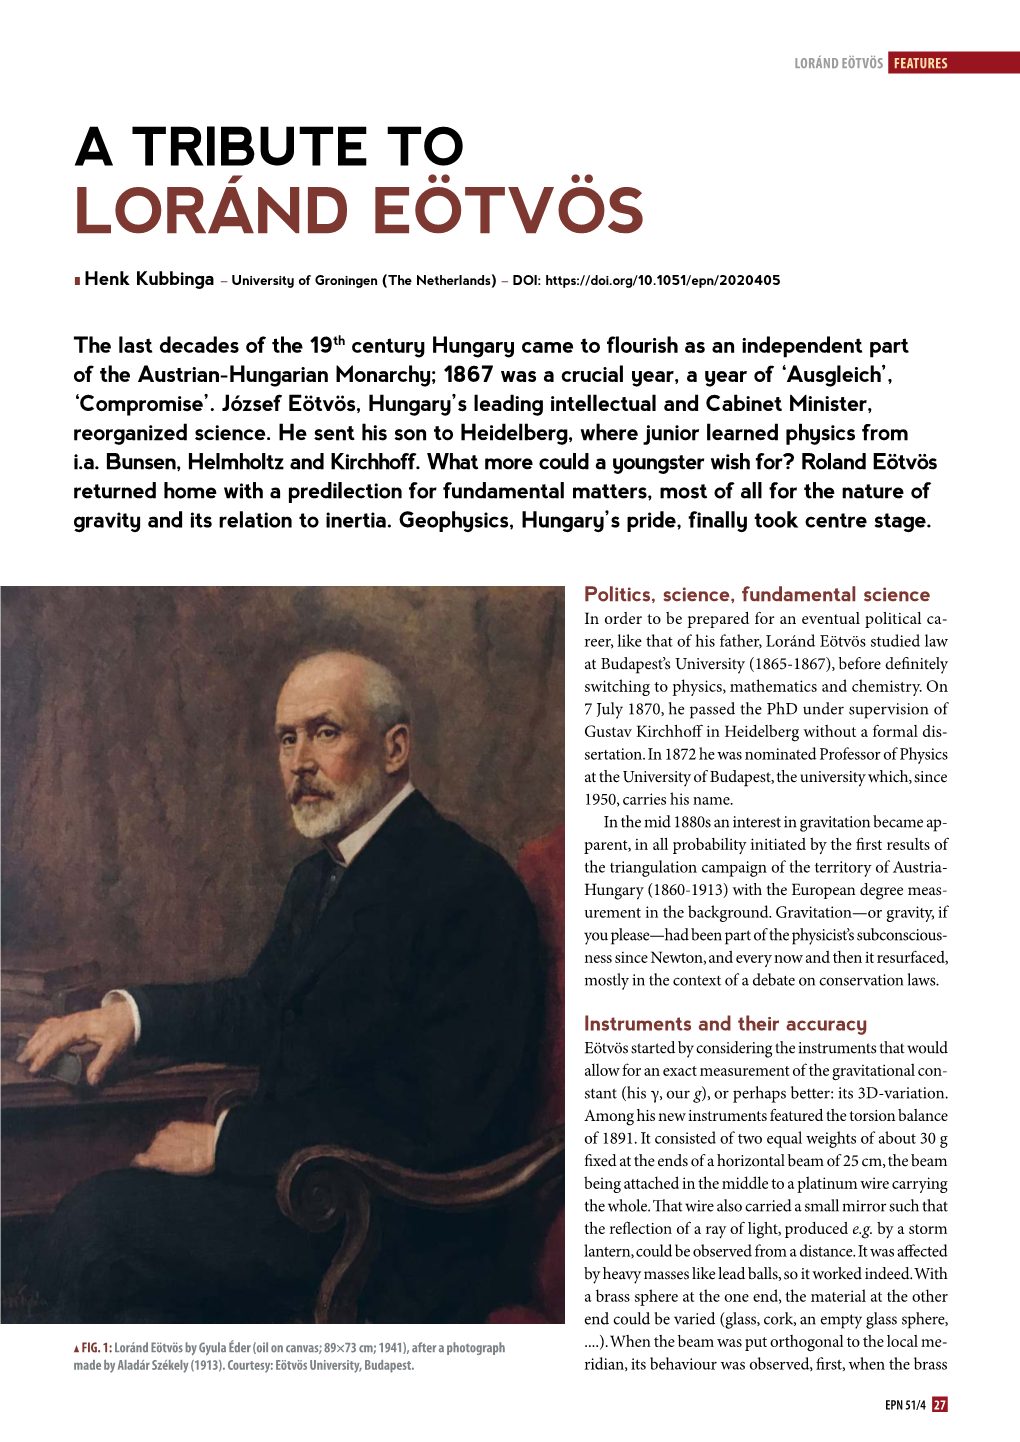 A Tribute to Loránd Eötvös